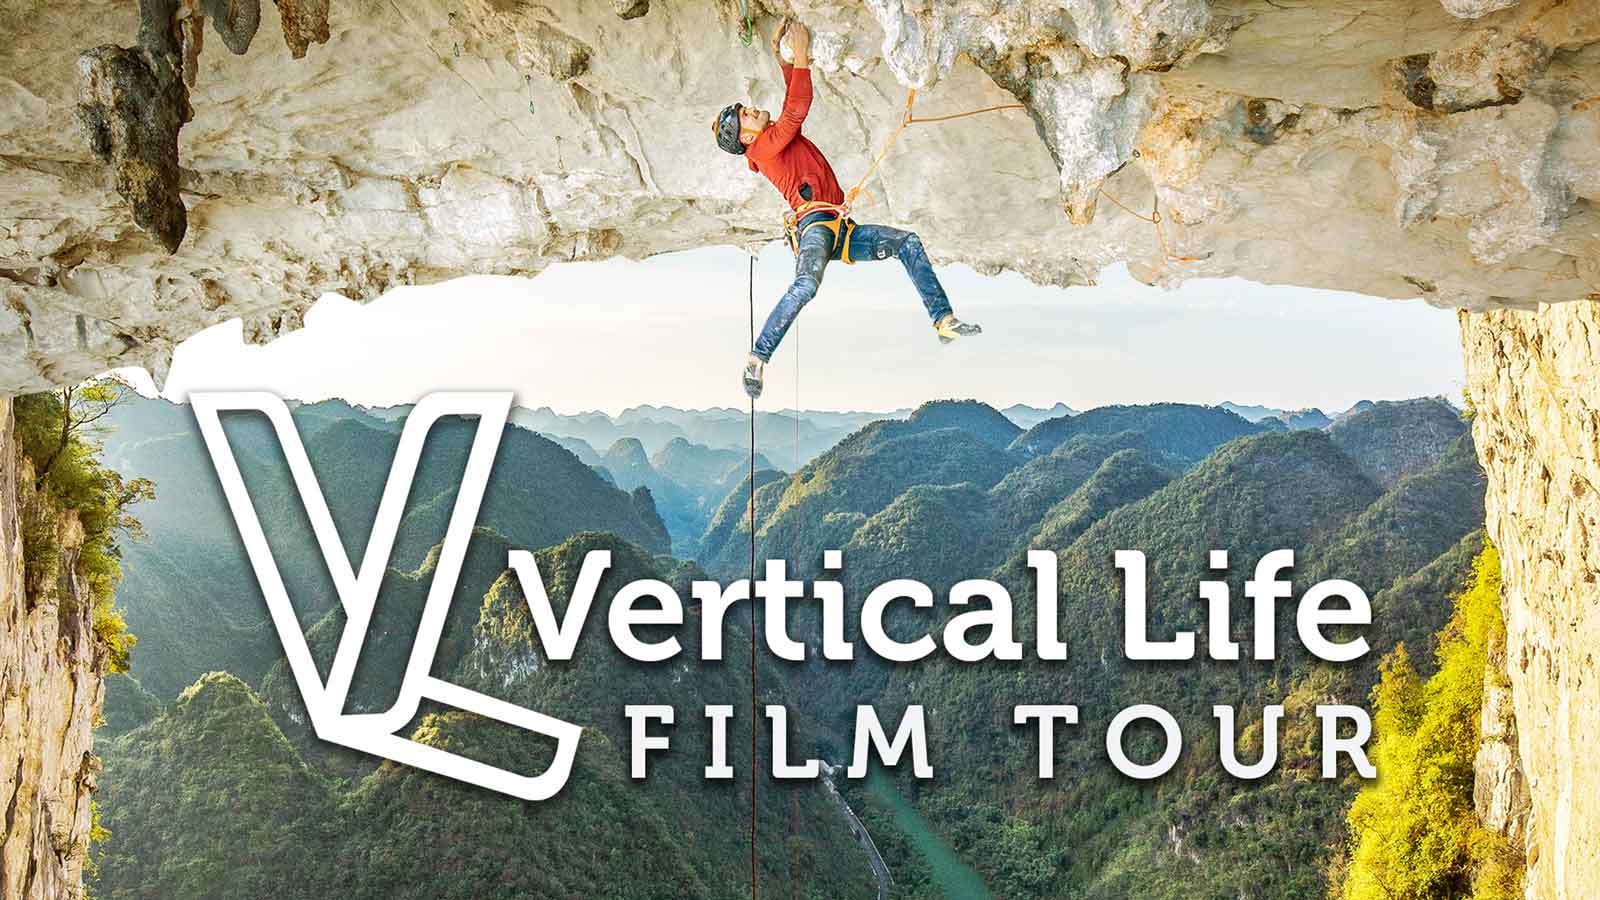 Mountain Equipment Vertical Life Film Tour Banner